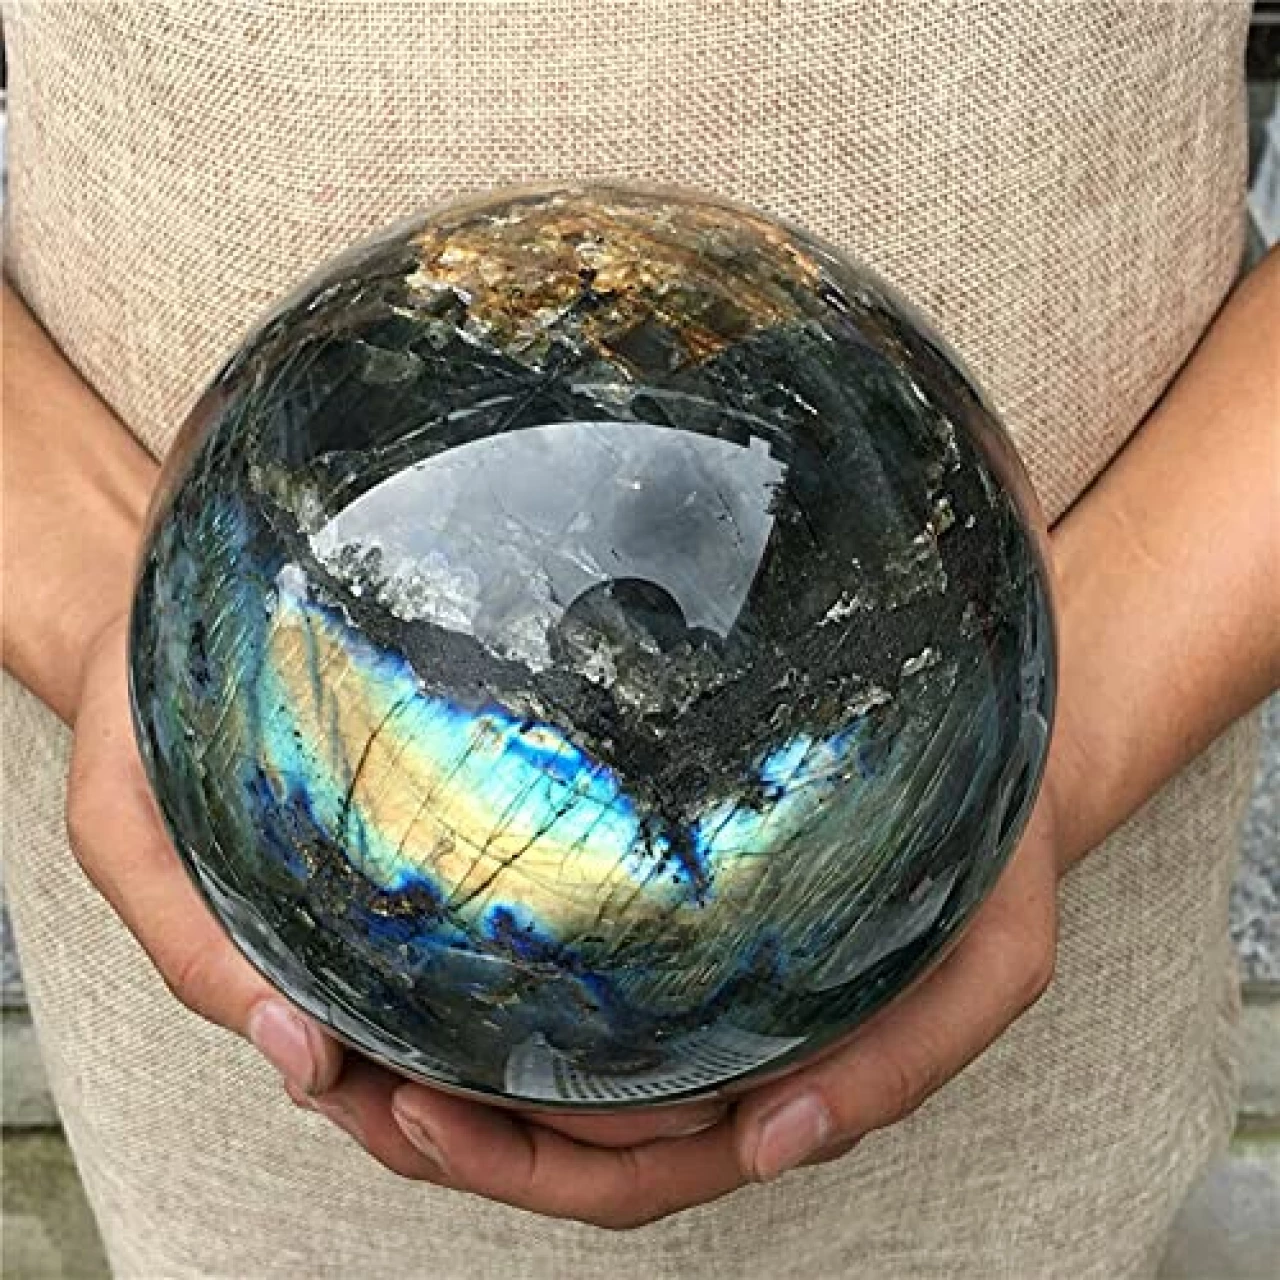 GUSTYT Unique Crystal Natural Labradorite Sphere Rock Quartz Crystal Ball Healing Natural Crystal (Size : 1300-1500g)